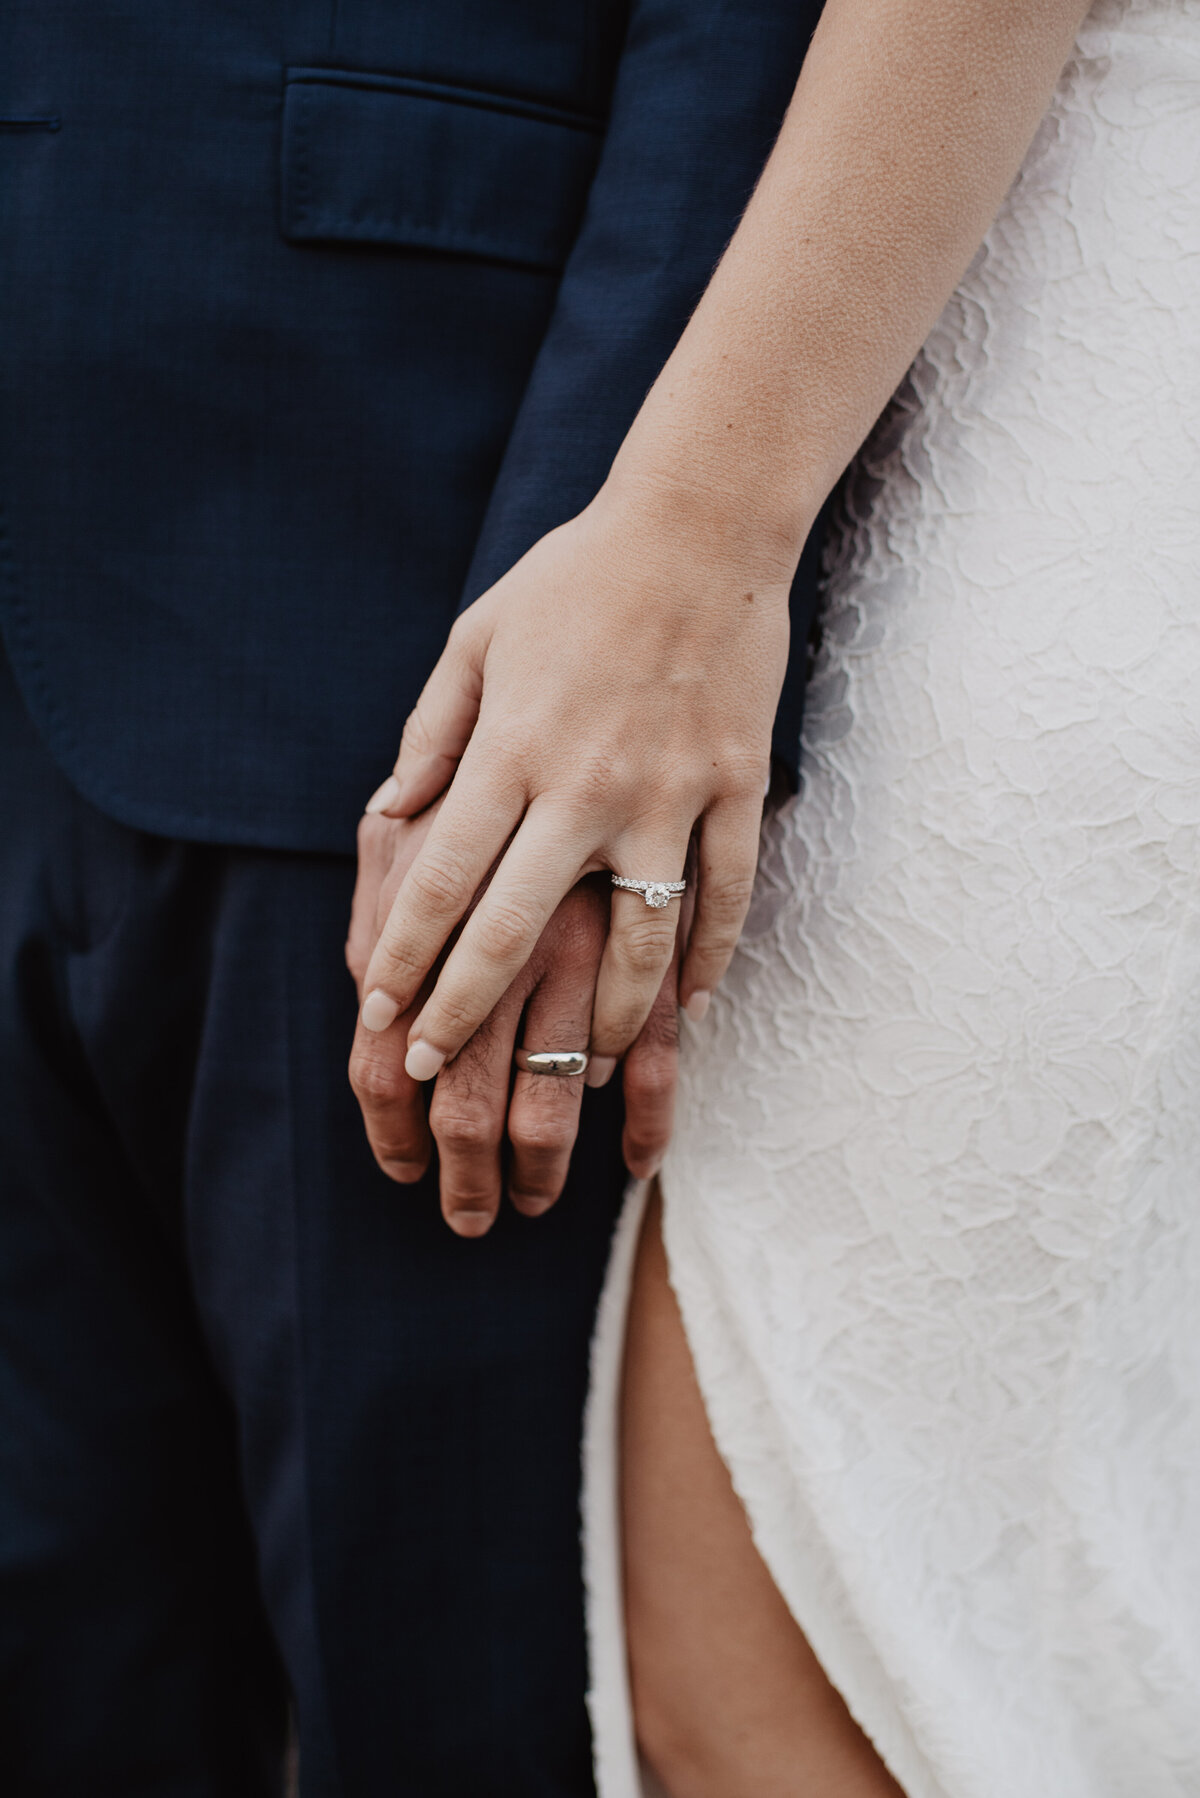 Photographers Jackson Hole capture bride and groom's rings